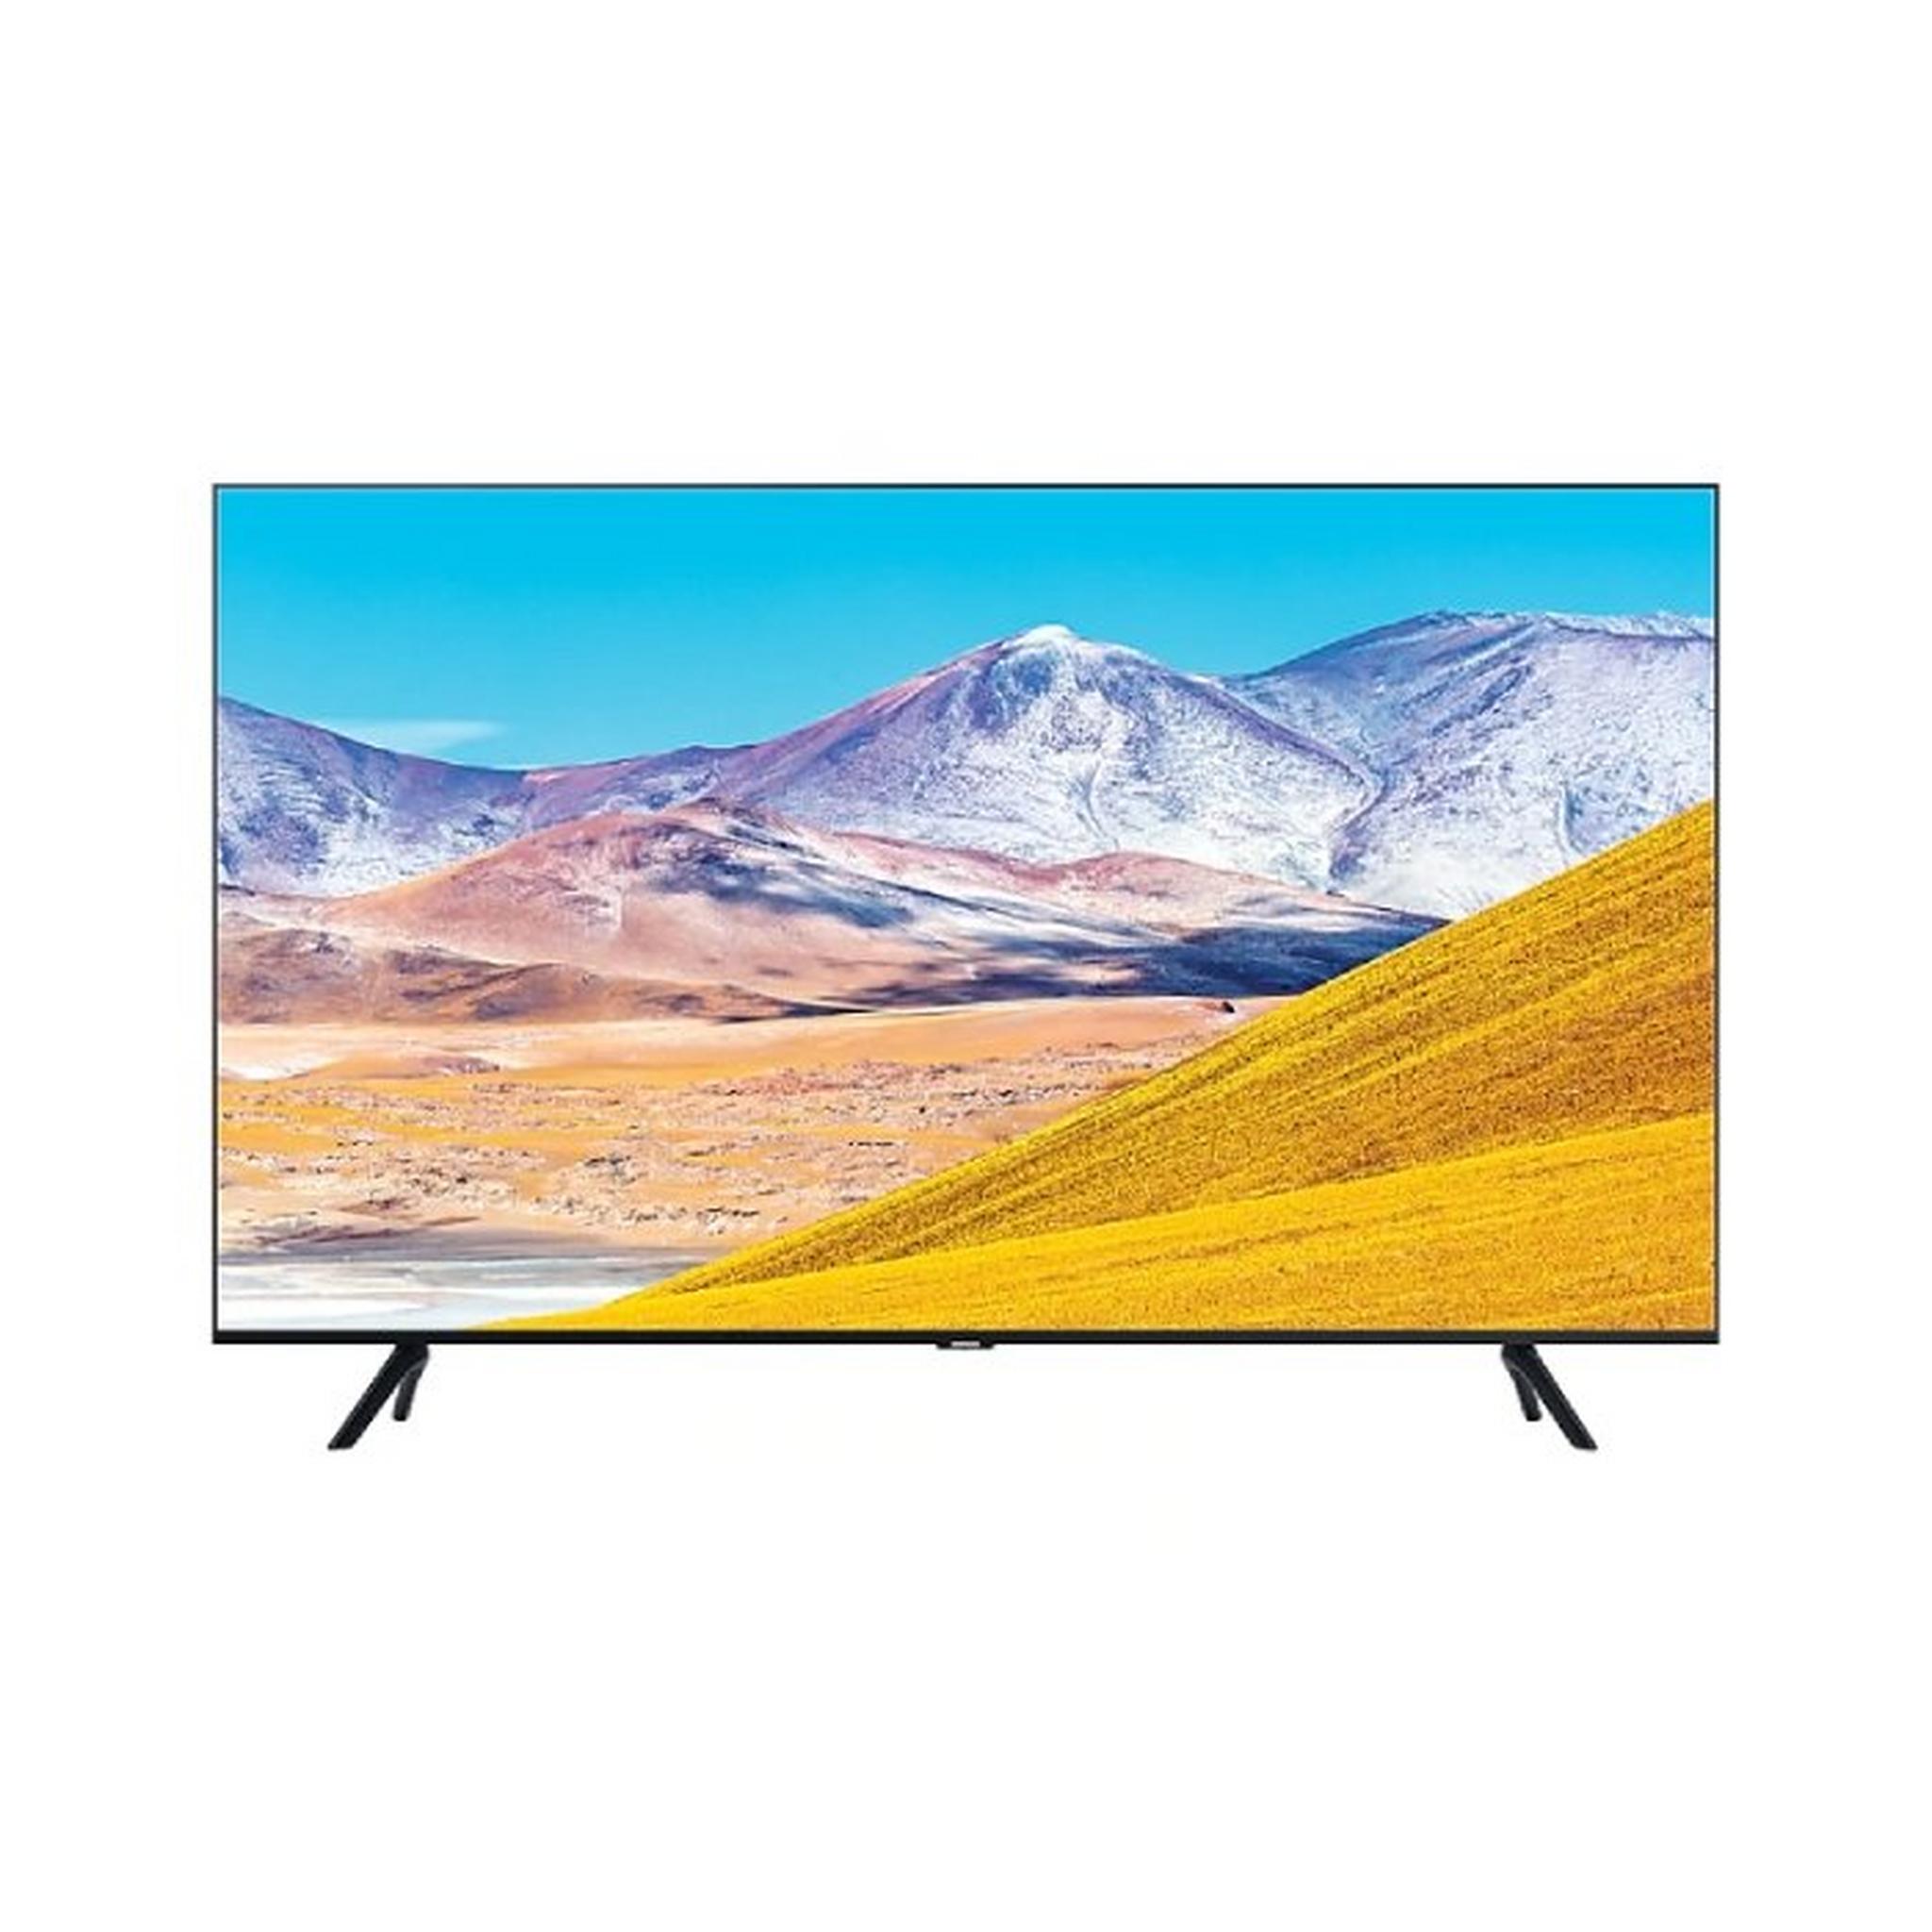 Samsung TV 65" UHD 4k Smart LED (UA65TU8000)